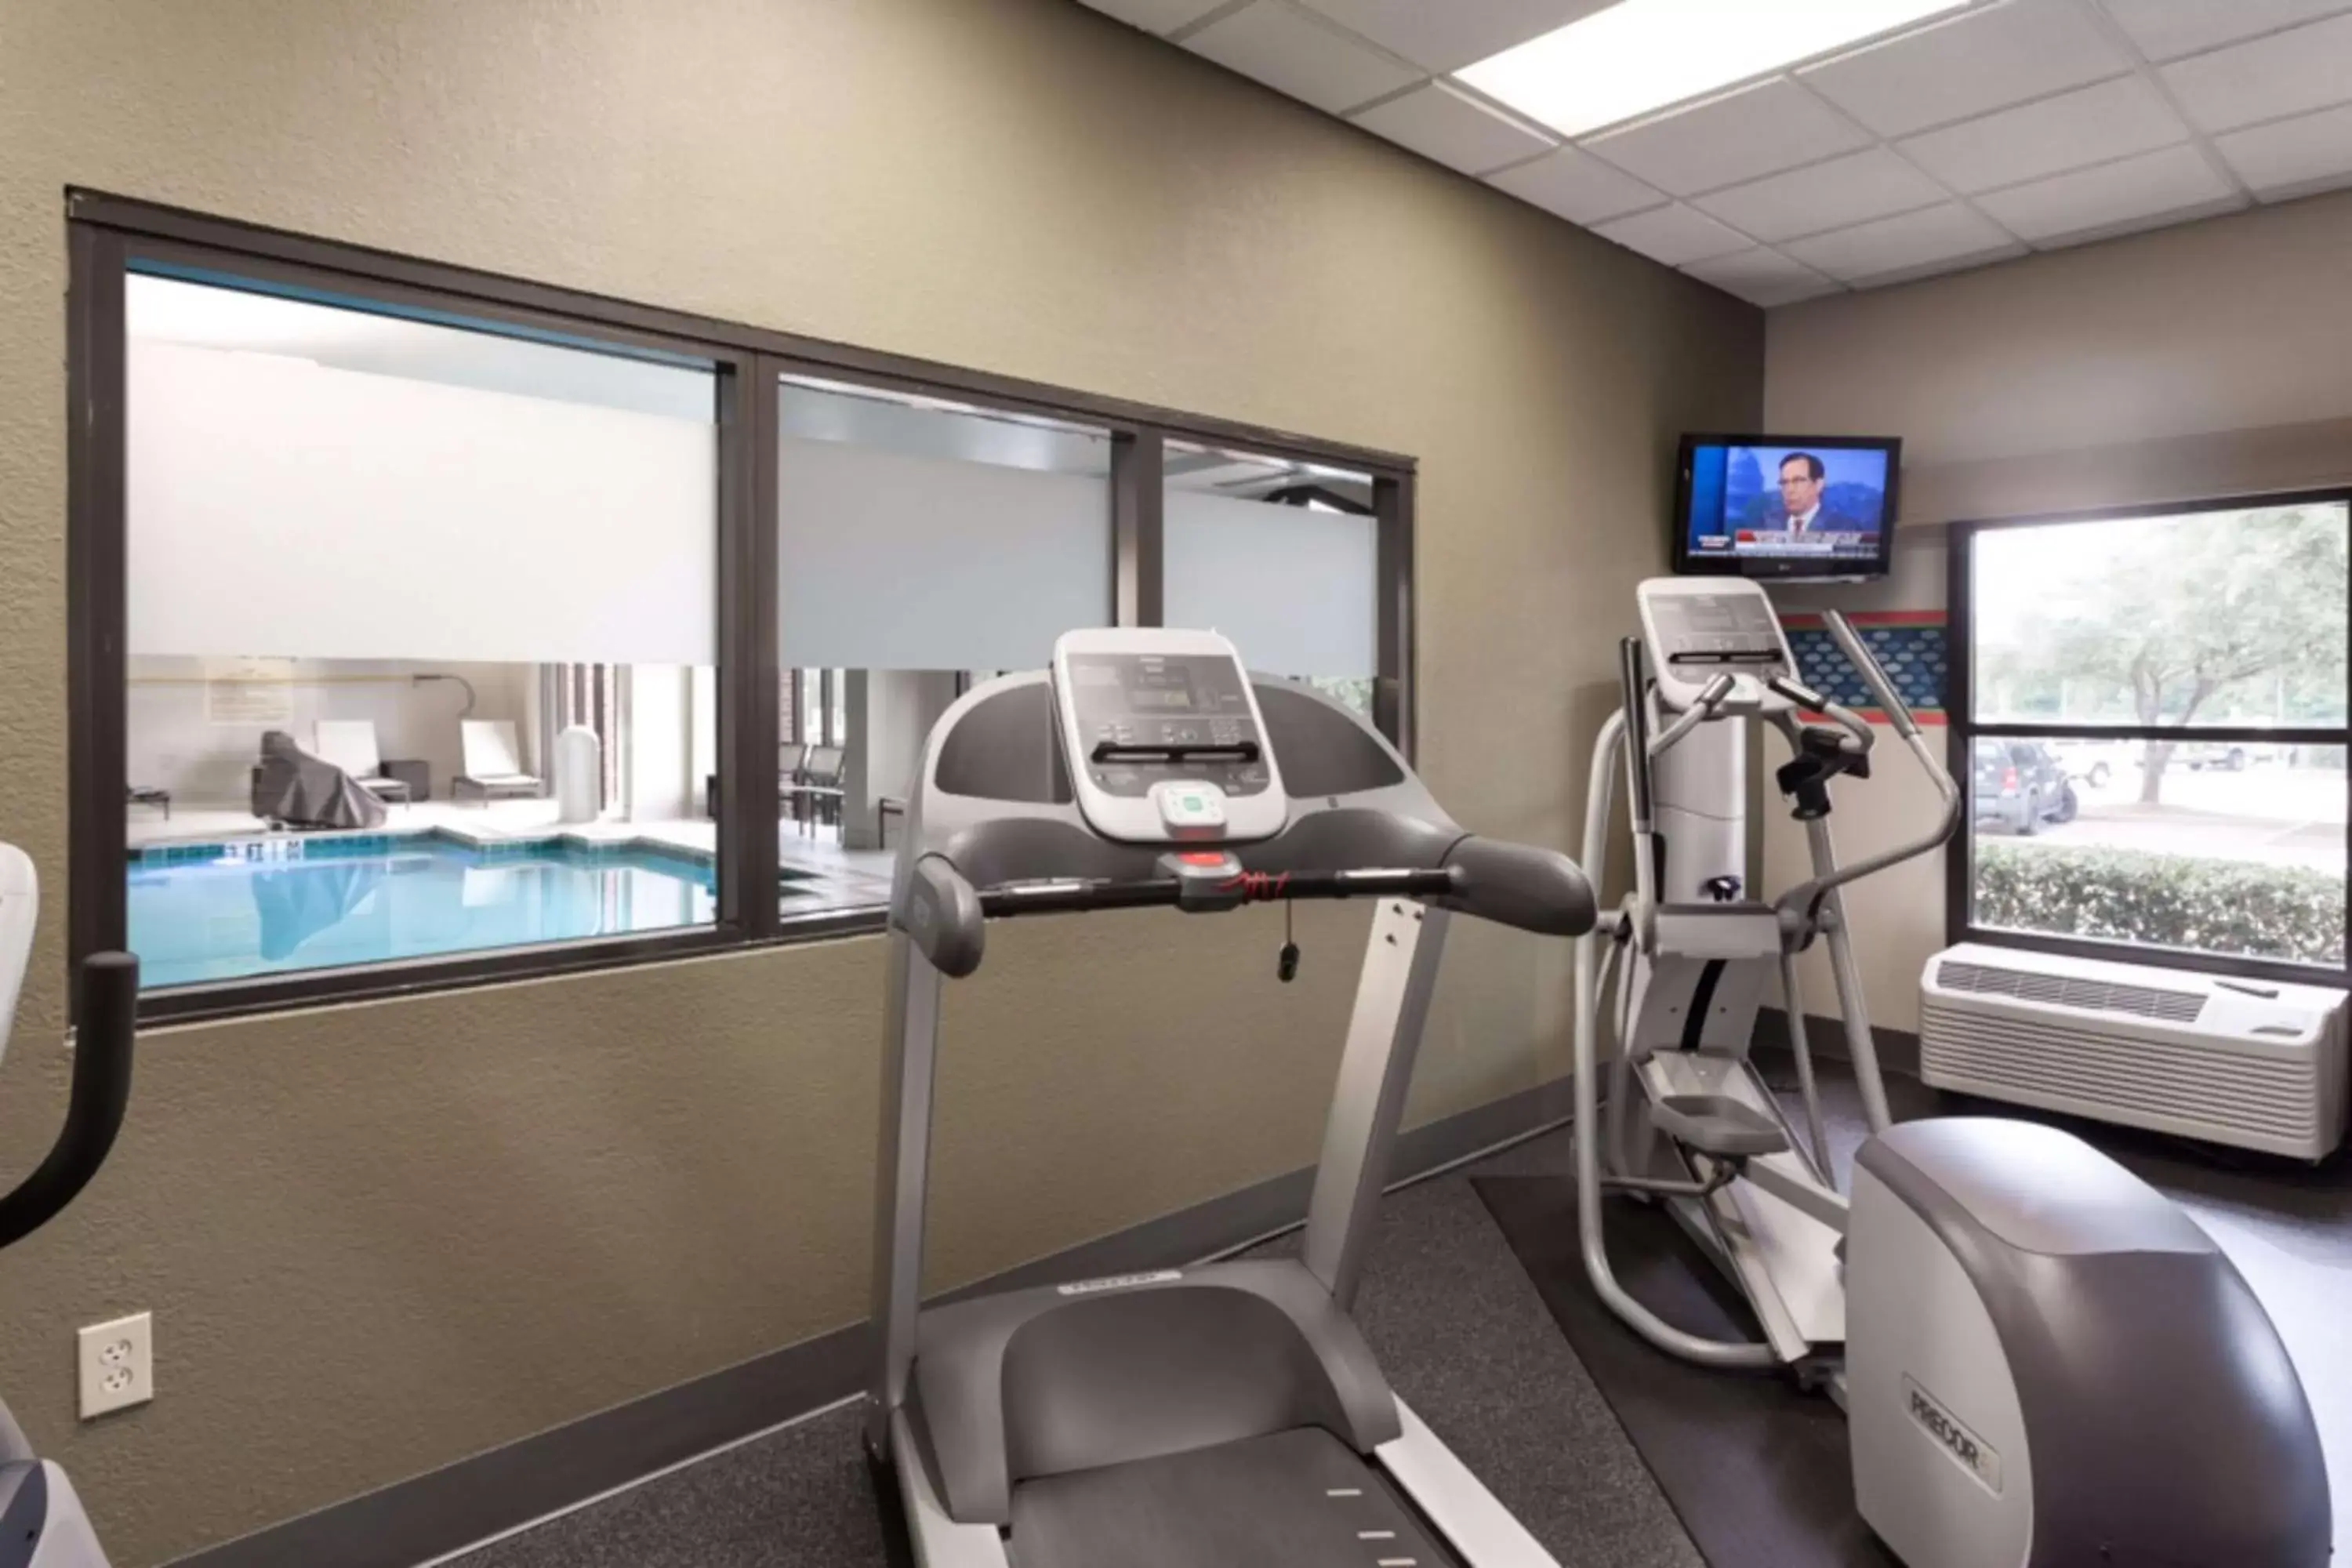 Fitness centre/facilities, Fitness Center/Facilities in Hampton Inn & Suites Dallas DFW Airport North Grapevine